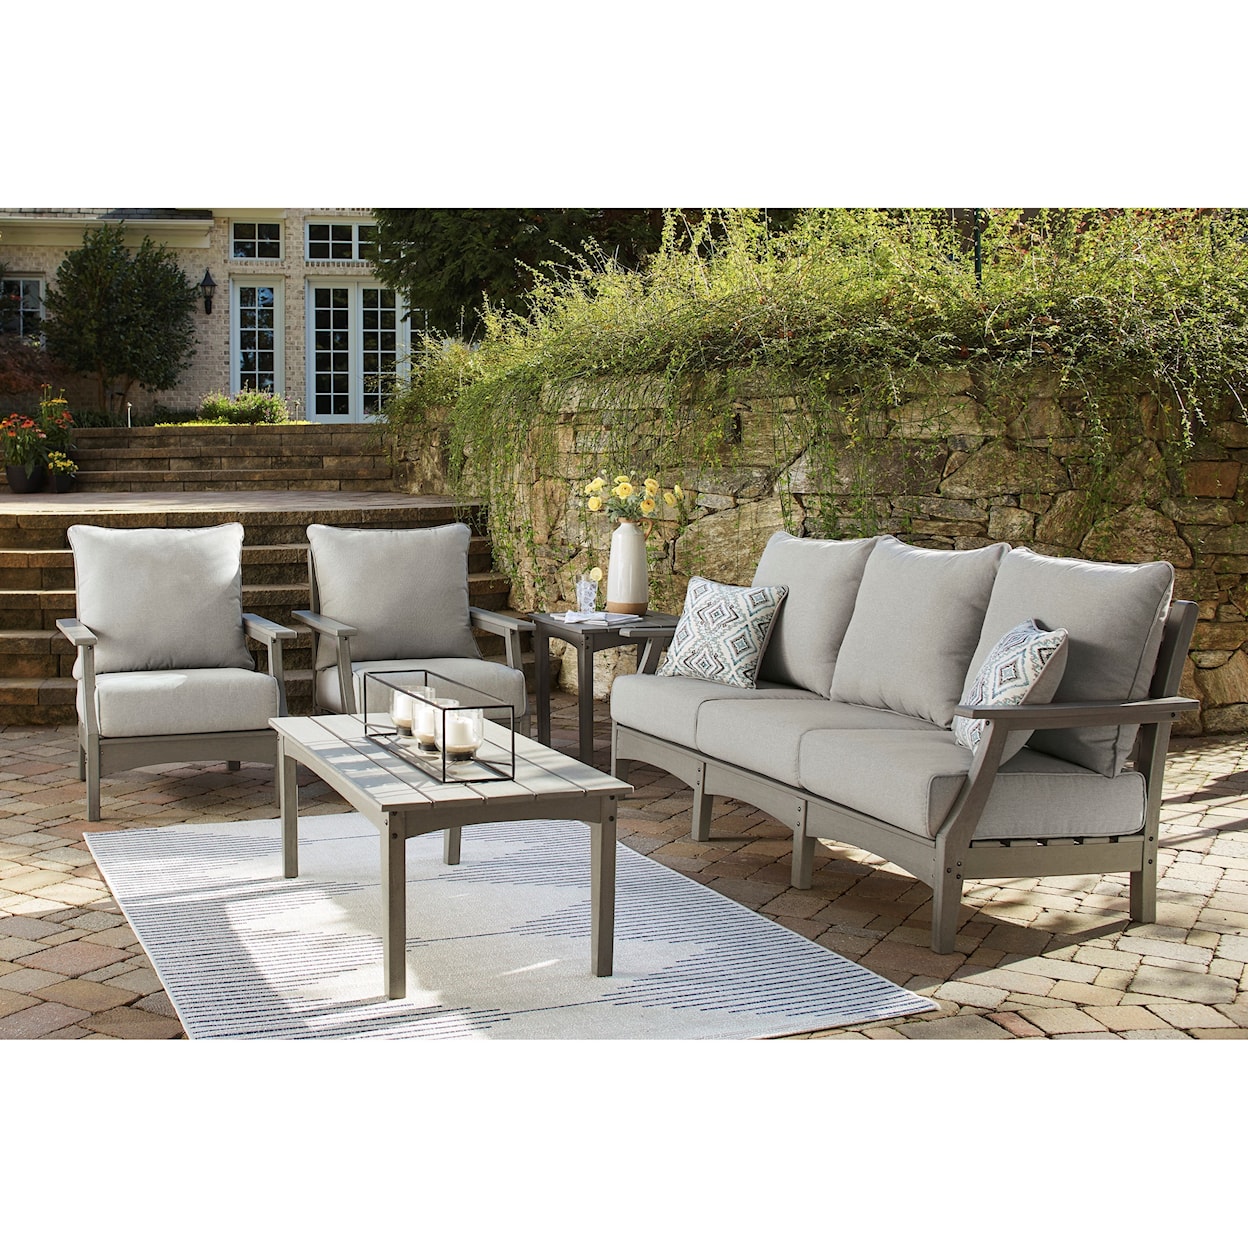 Ashley Furniture Signature Design Visola Outdoor Sofa, 2 Chairs, and Table Set